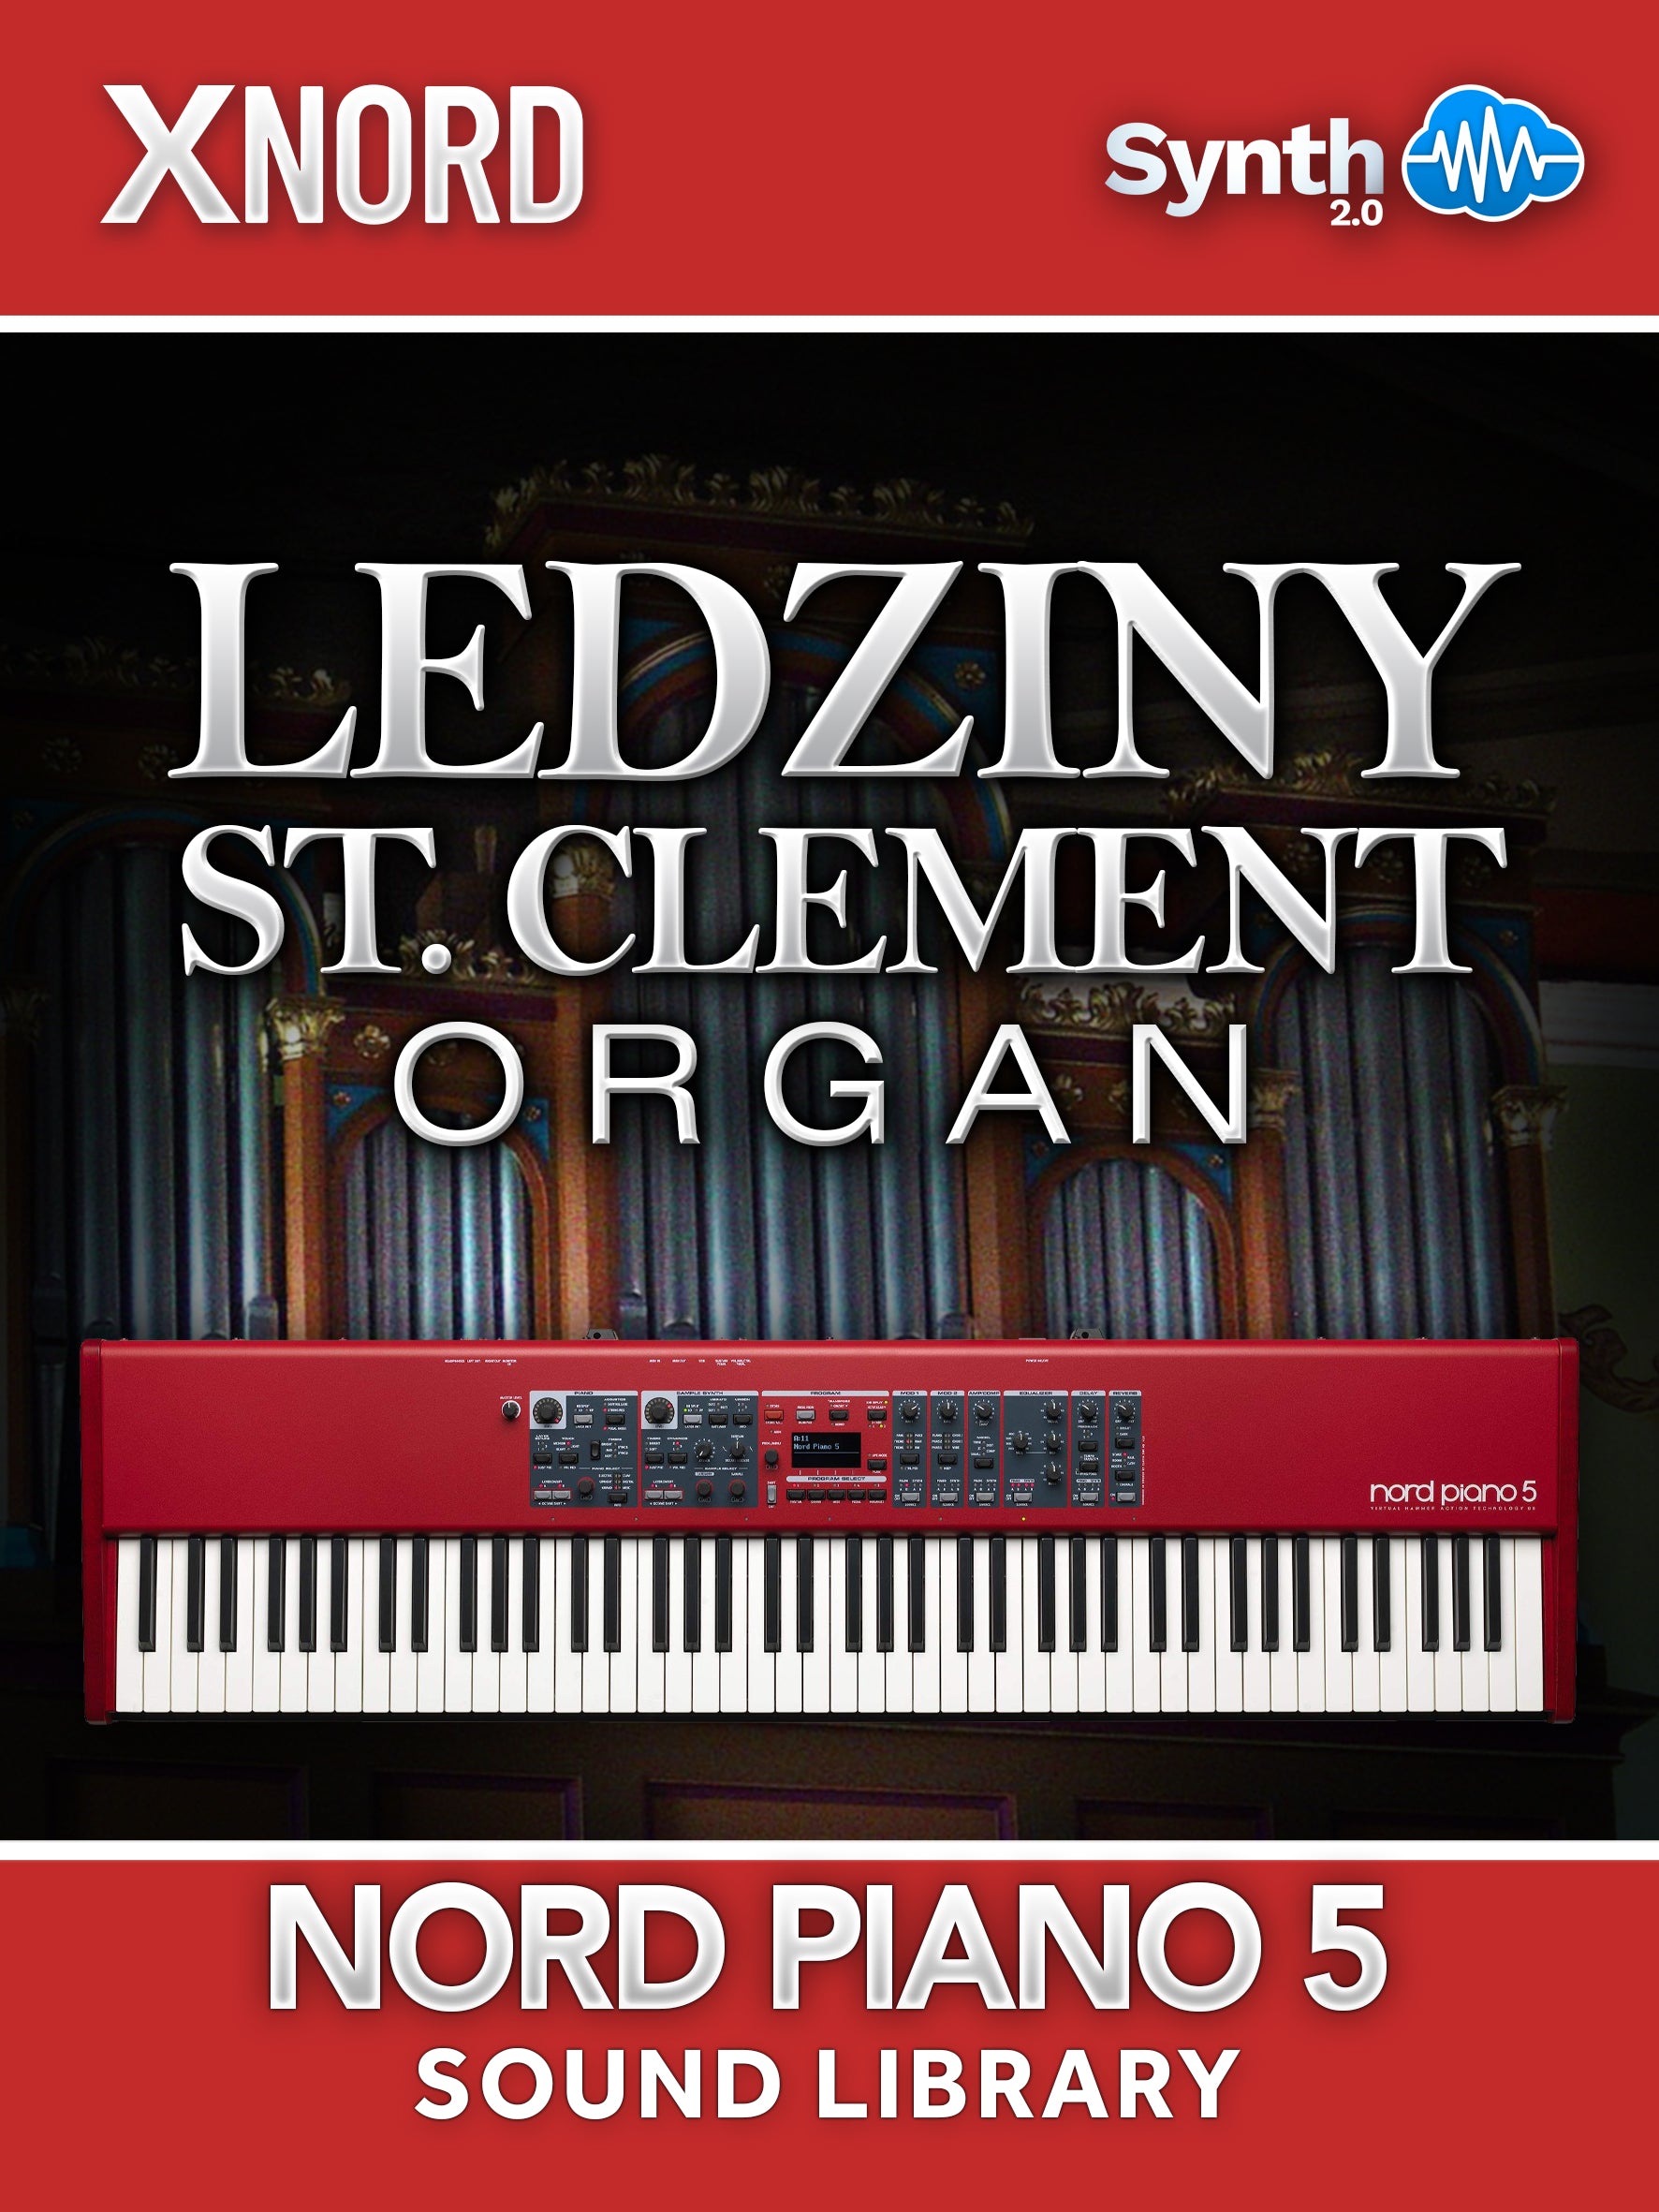 RCL006 - Ledziny, St. Clement Organ - Nord Piano 5 ( 26 presets )